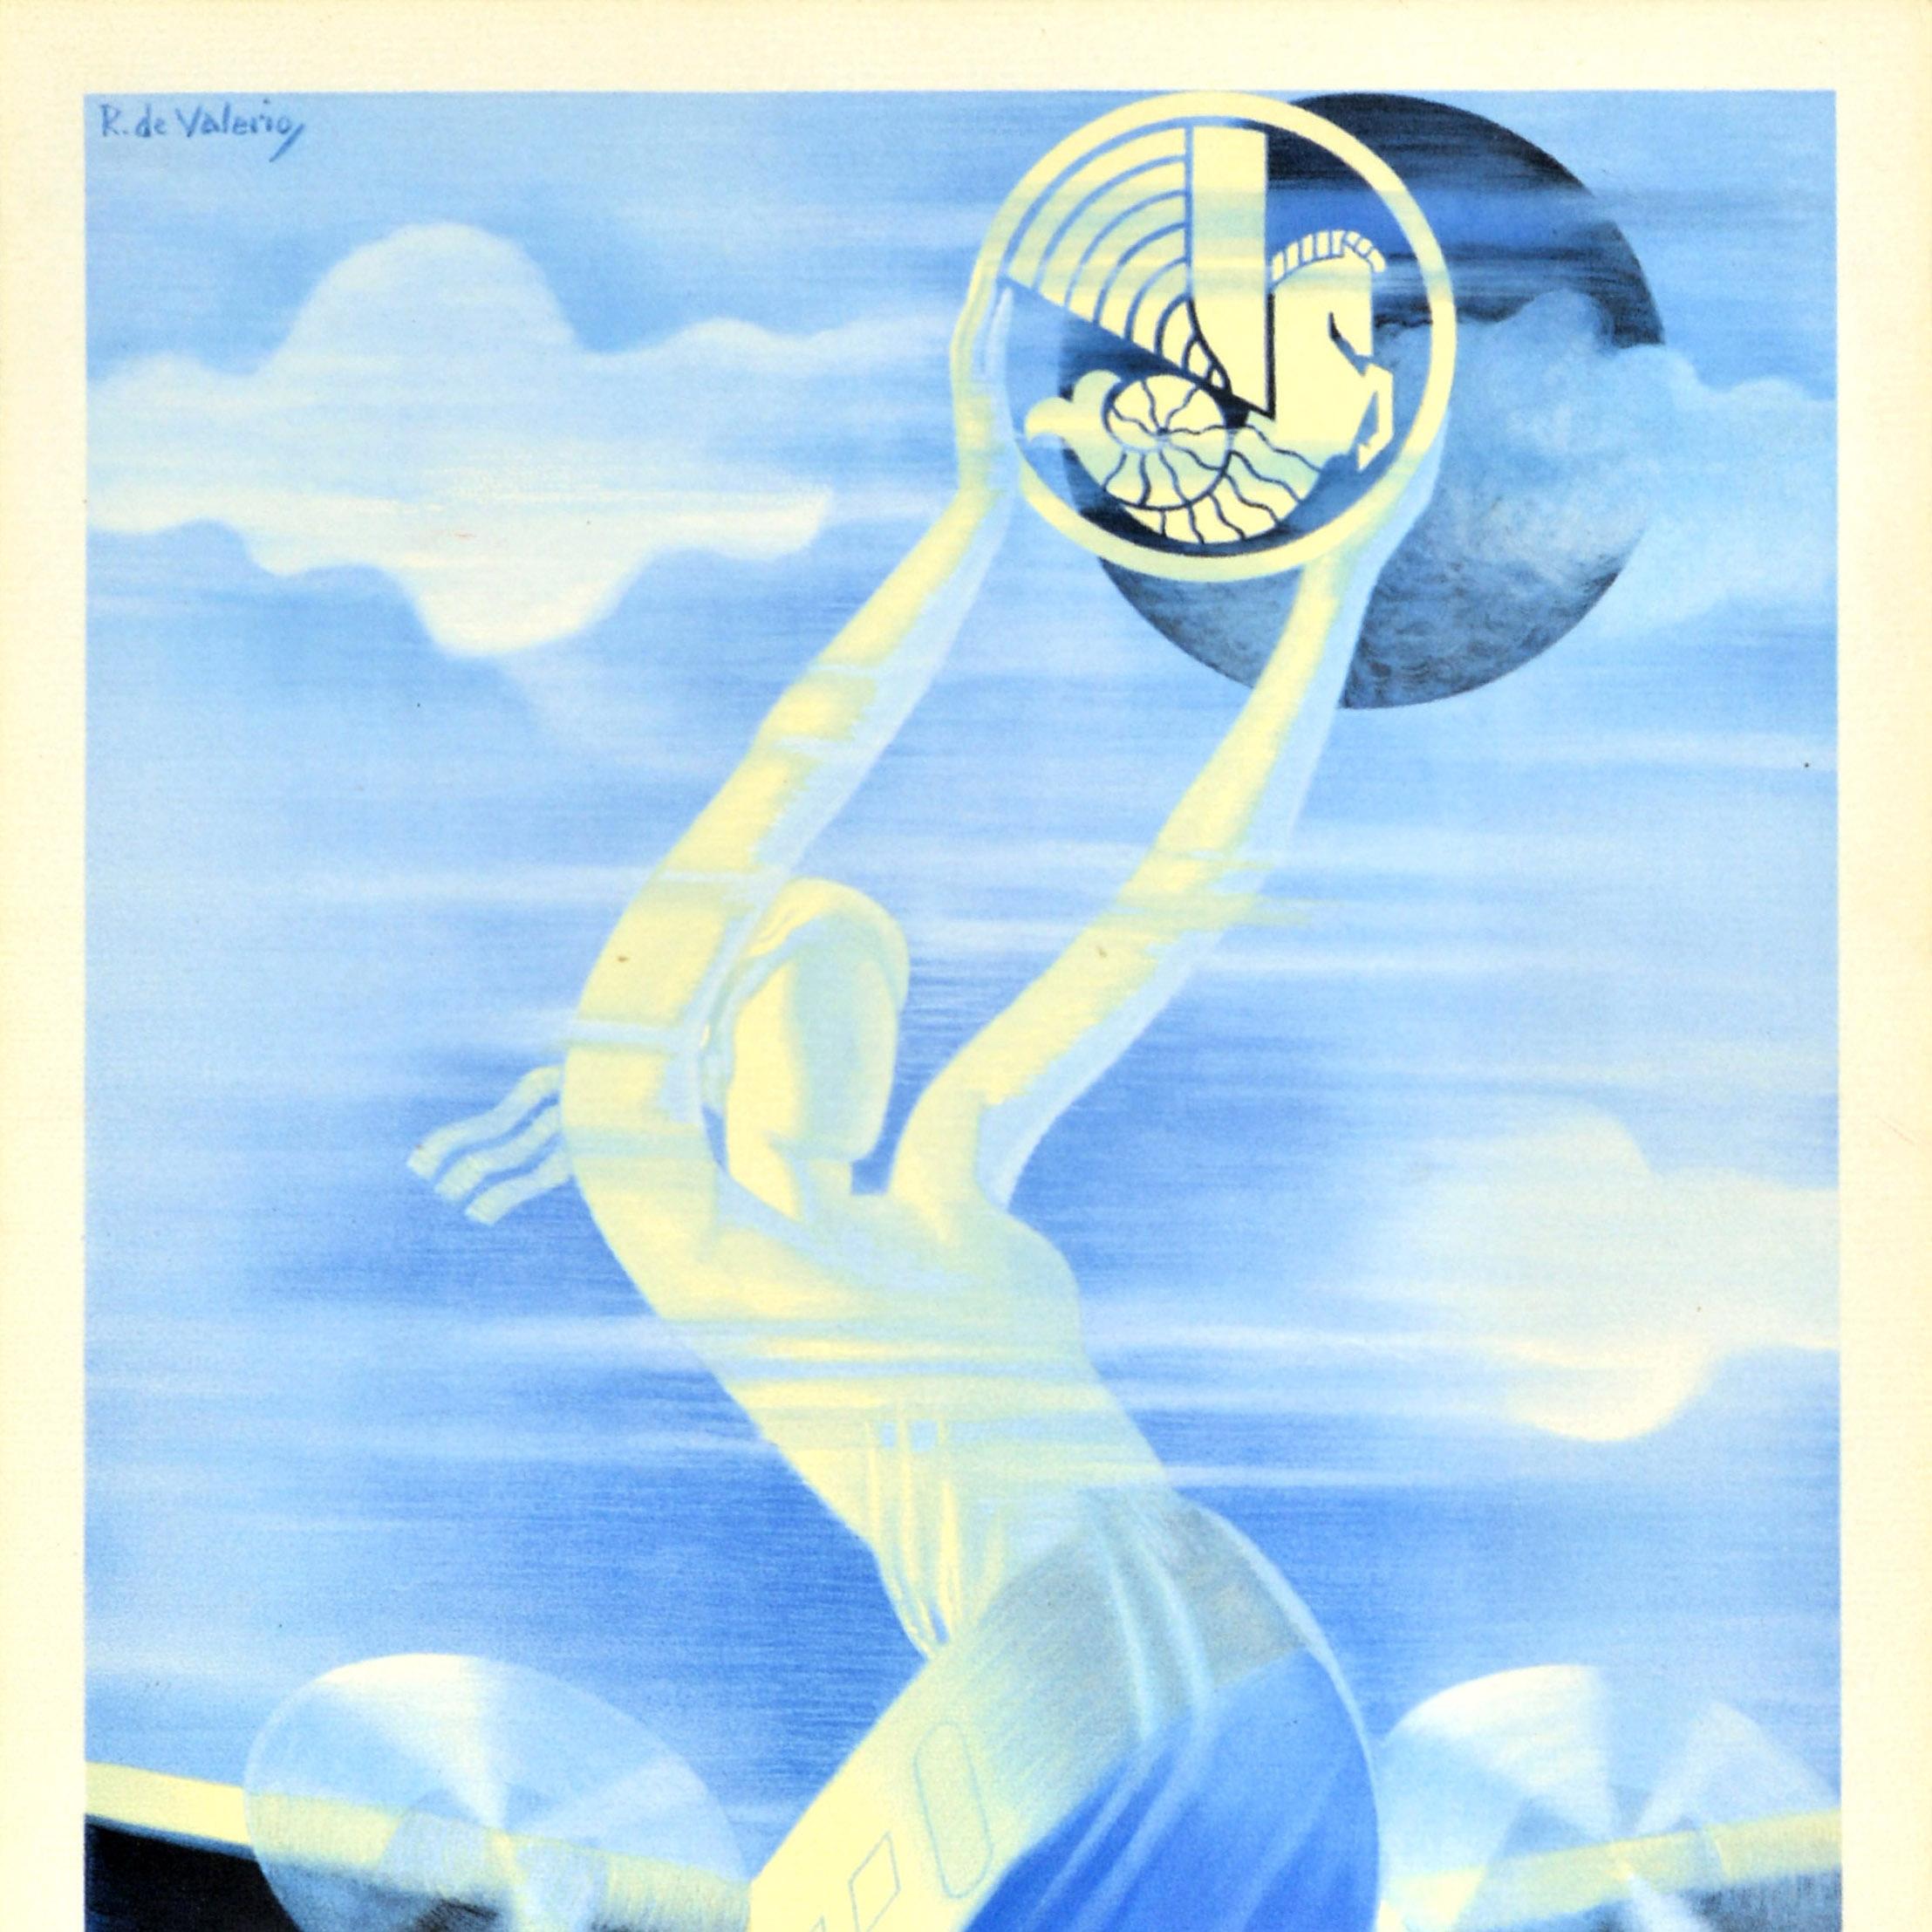 Art Deco Original Vintage Travel Poster Air France Airways In All Skies Roger De Valerio For Sale